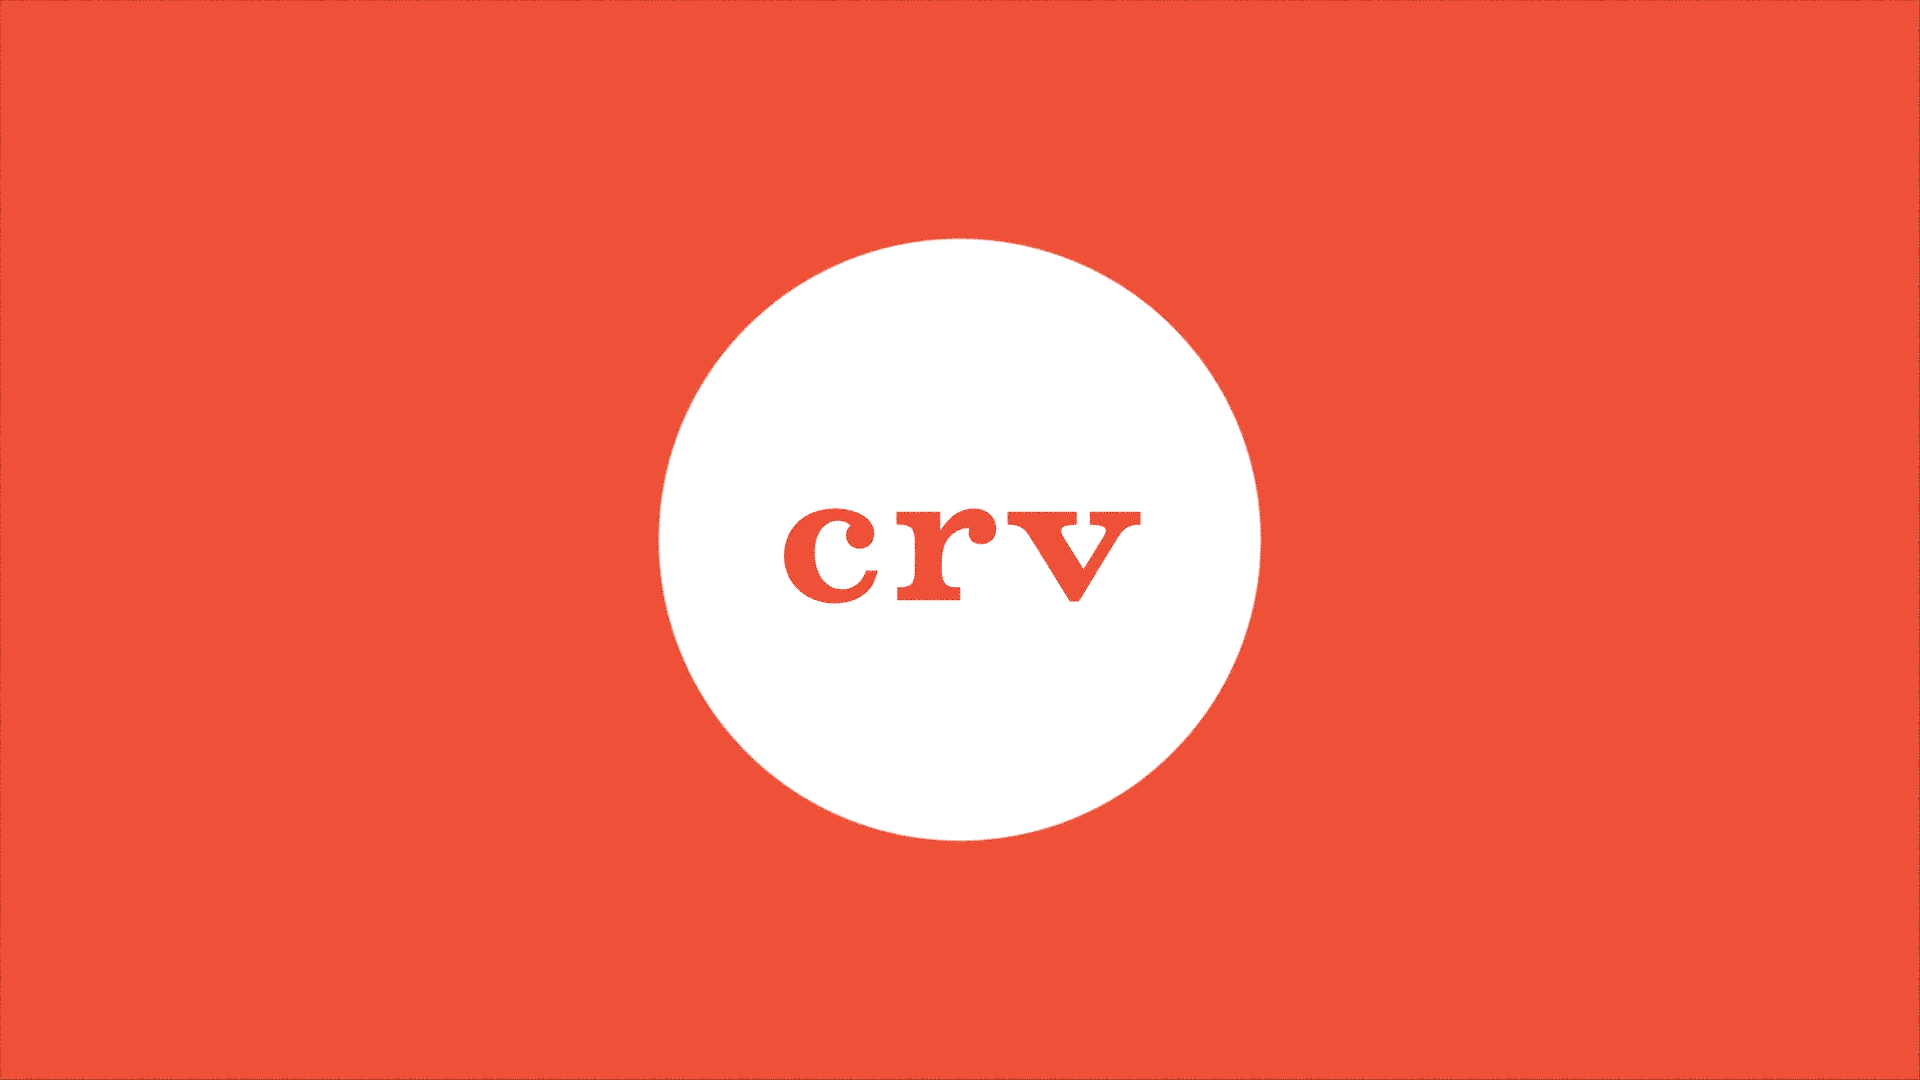 Charles River Ventures logo spinning around.